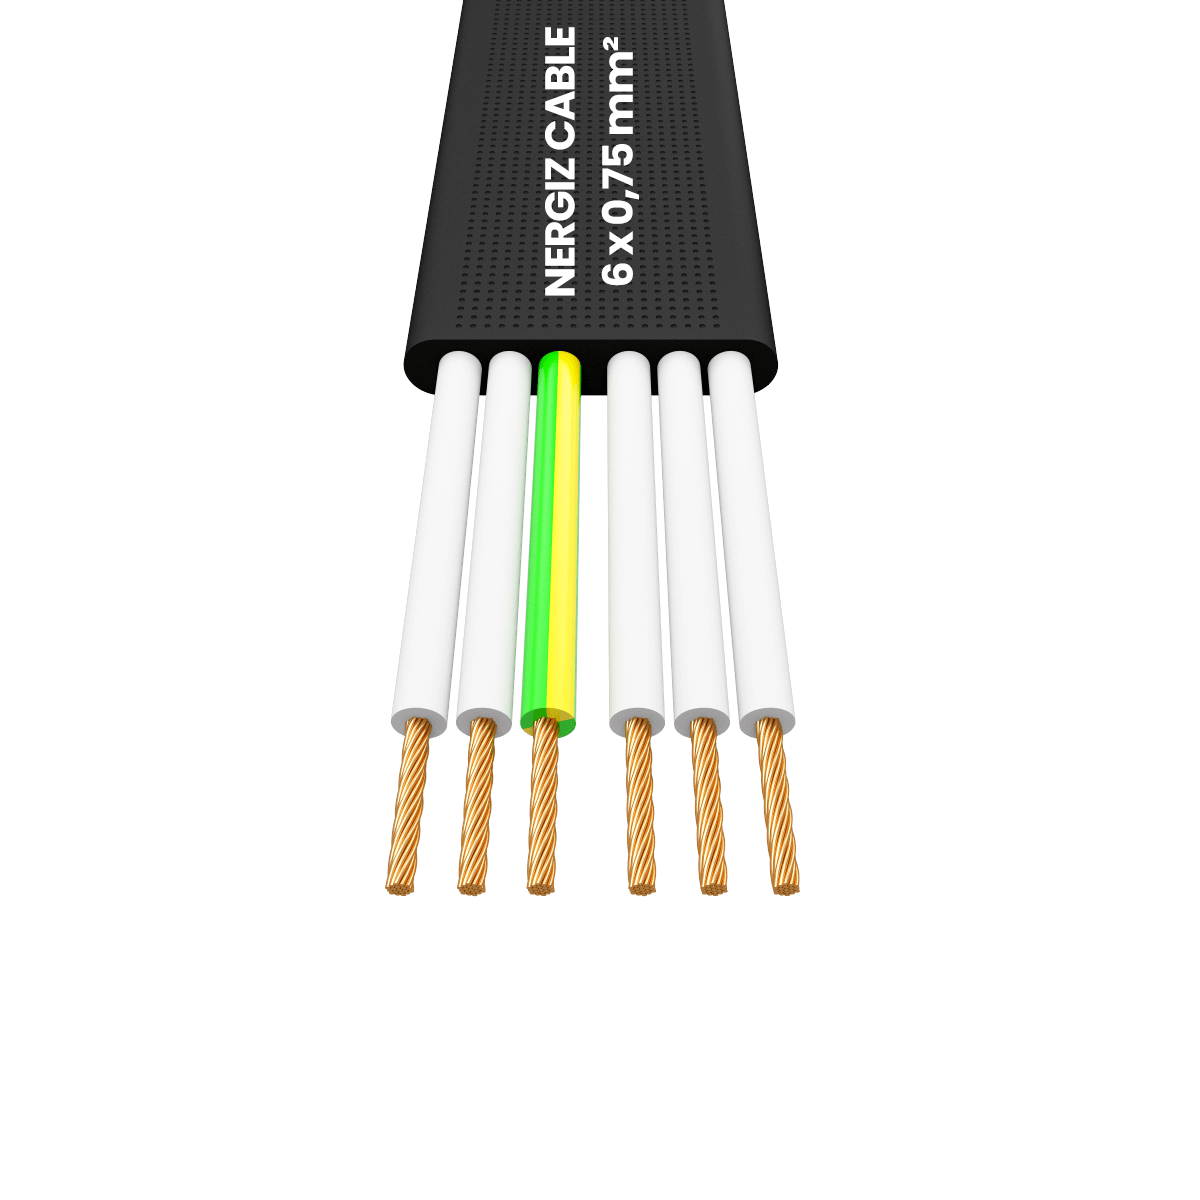 H05VVH6-F 6x0.75 mm² Flat Flexible Cable